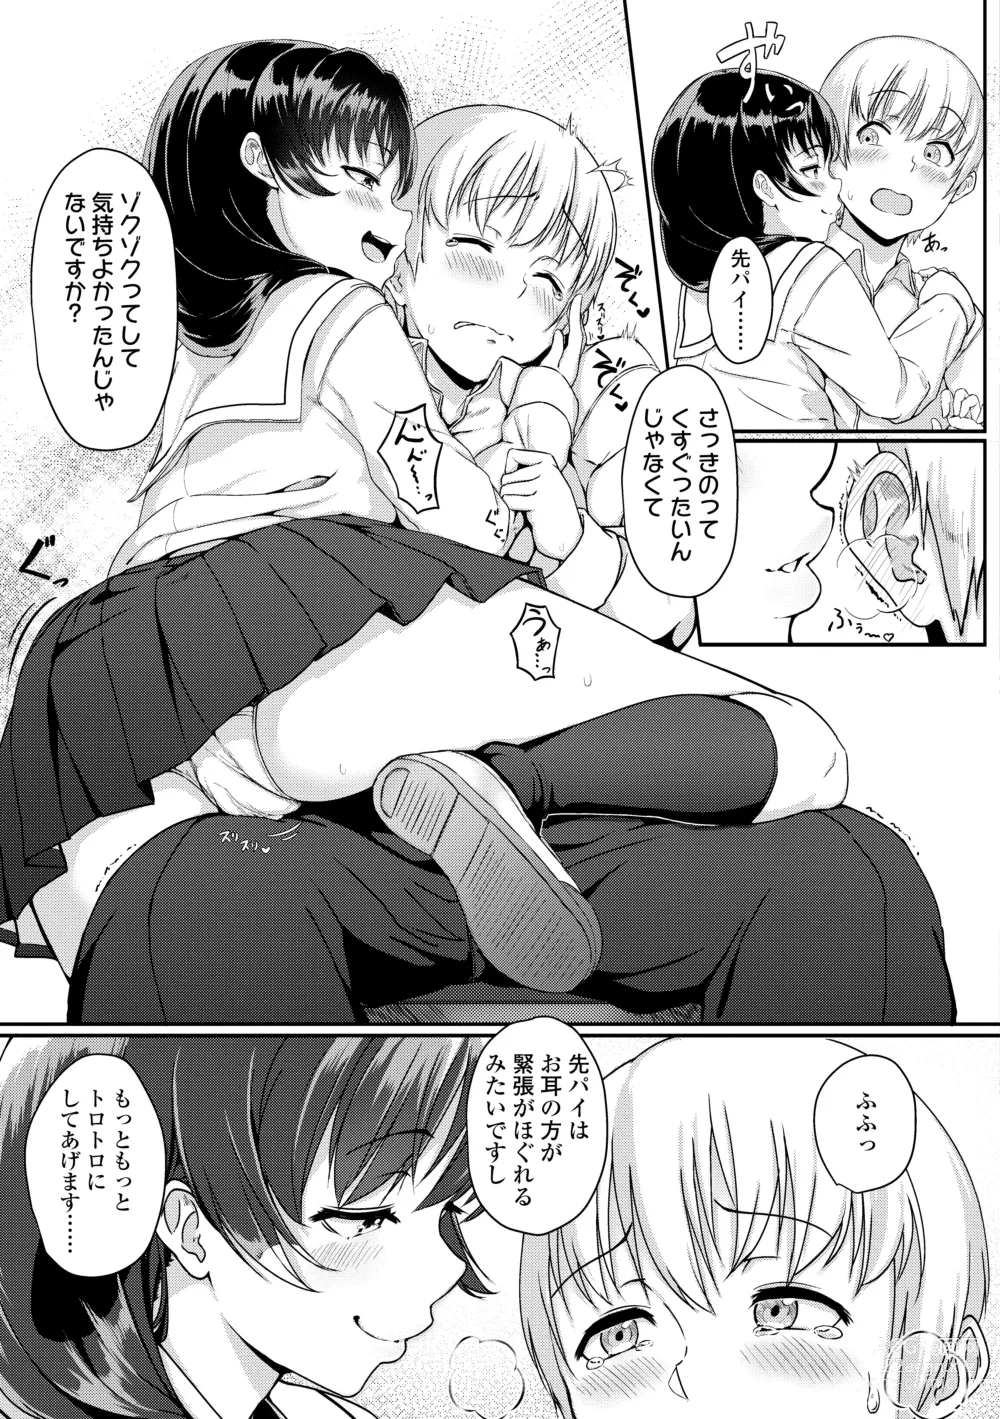 Page 185 of manga Ijiwaru Connect